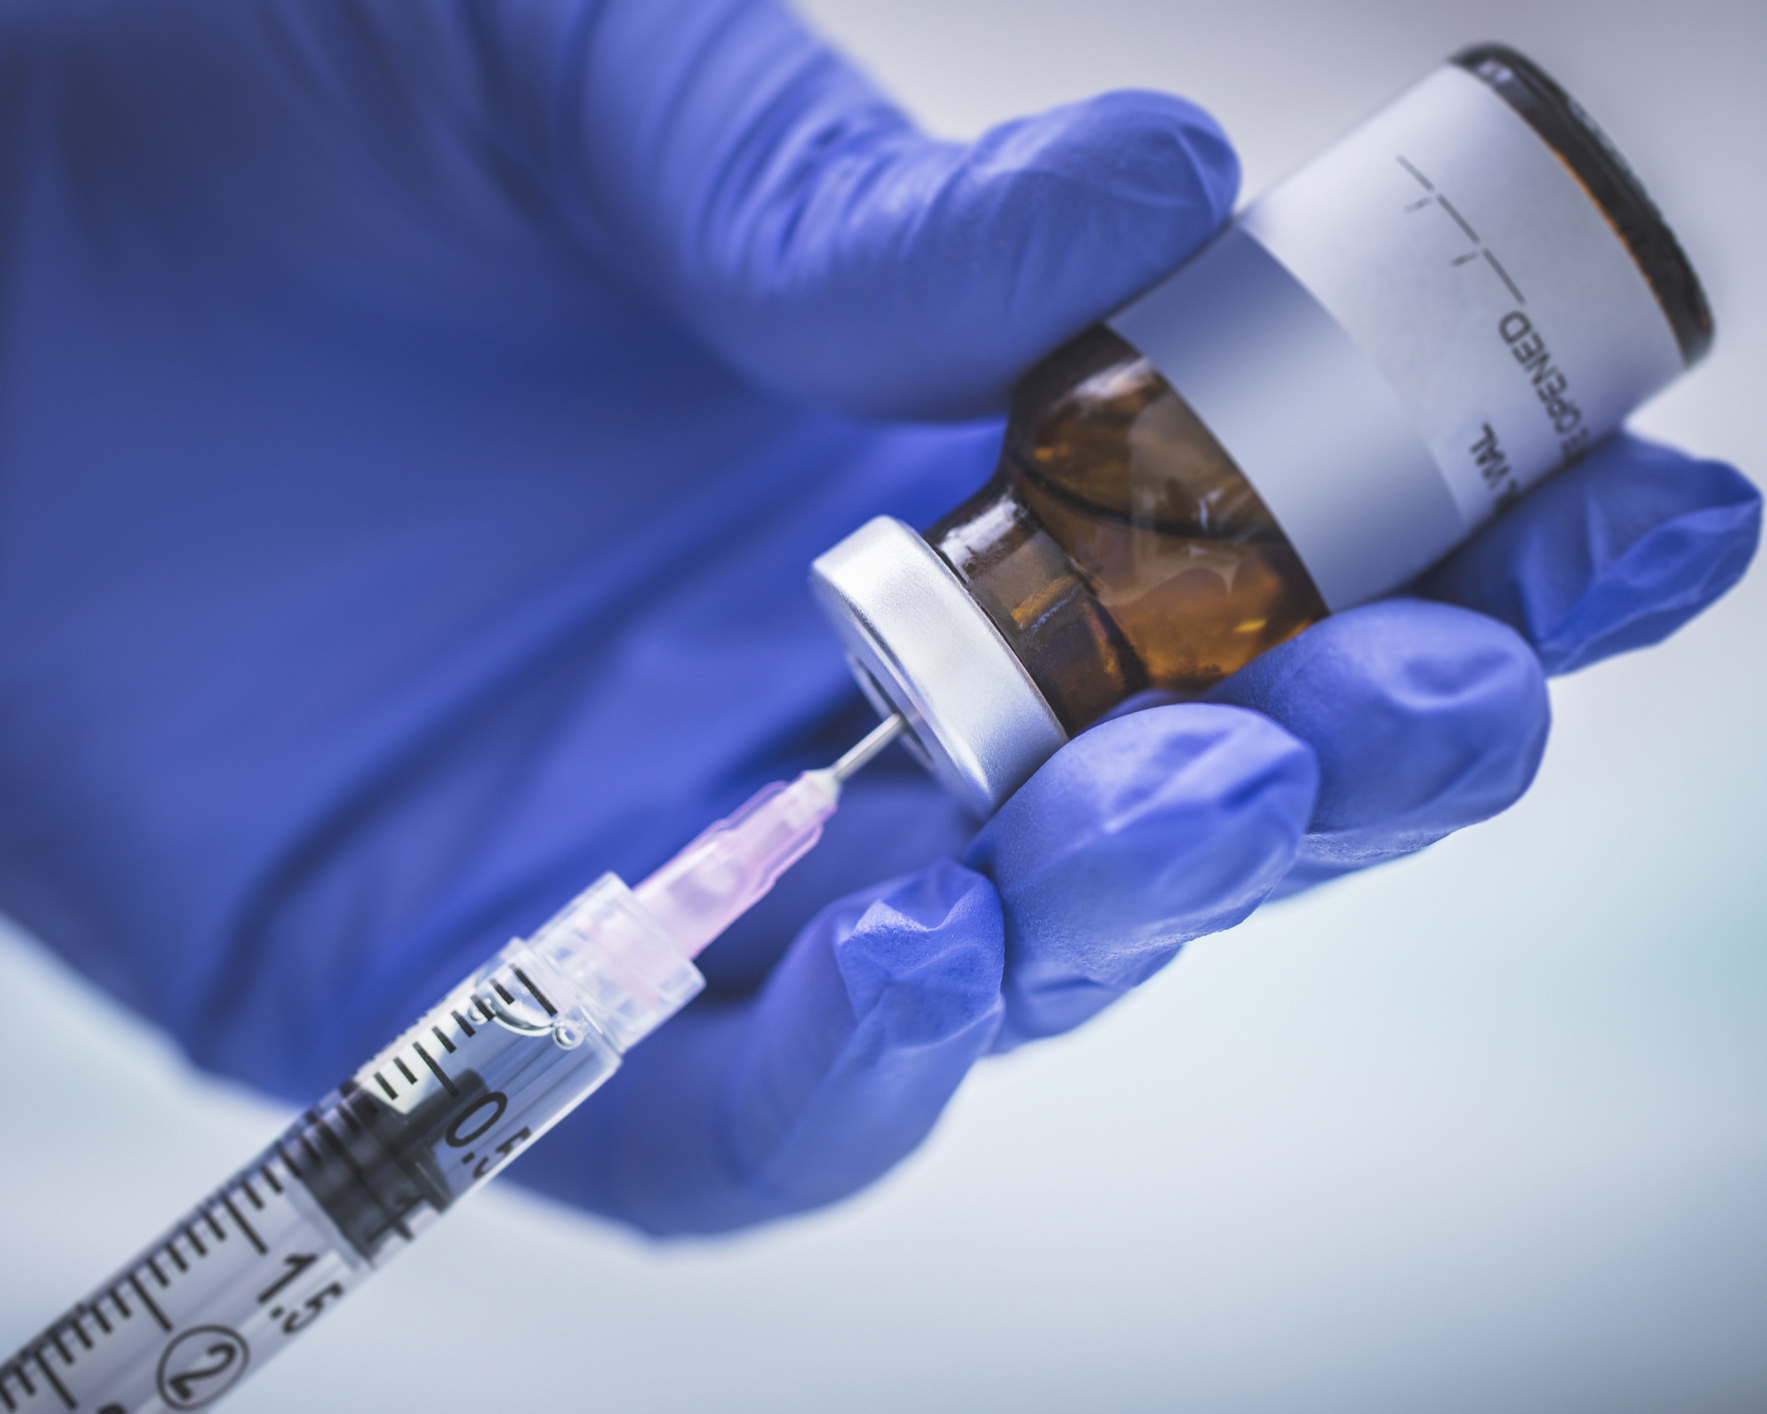 stock photo of needle and vaccine